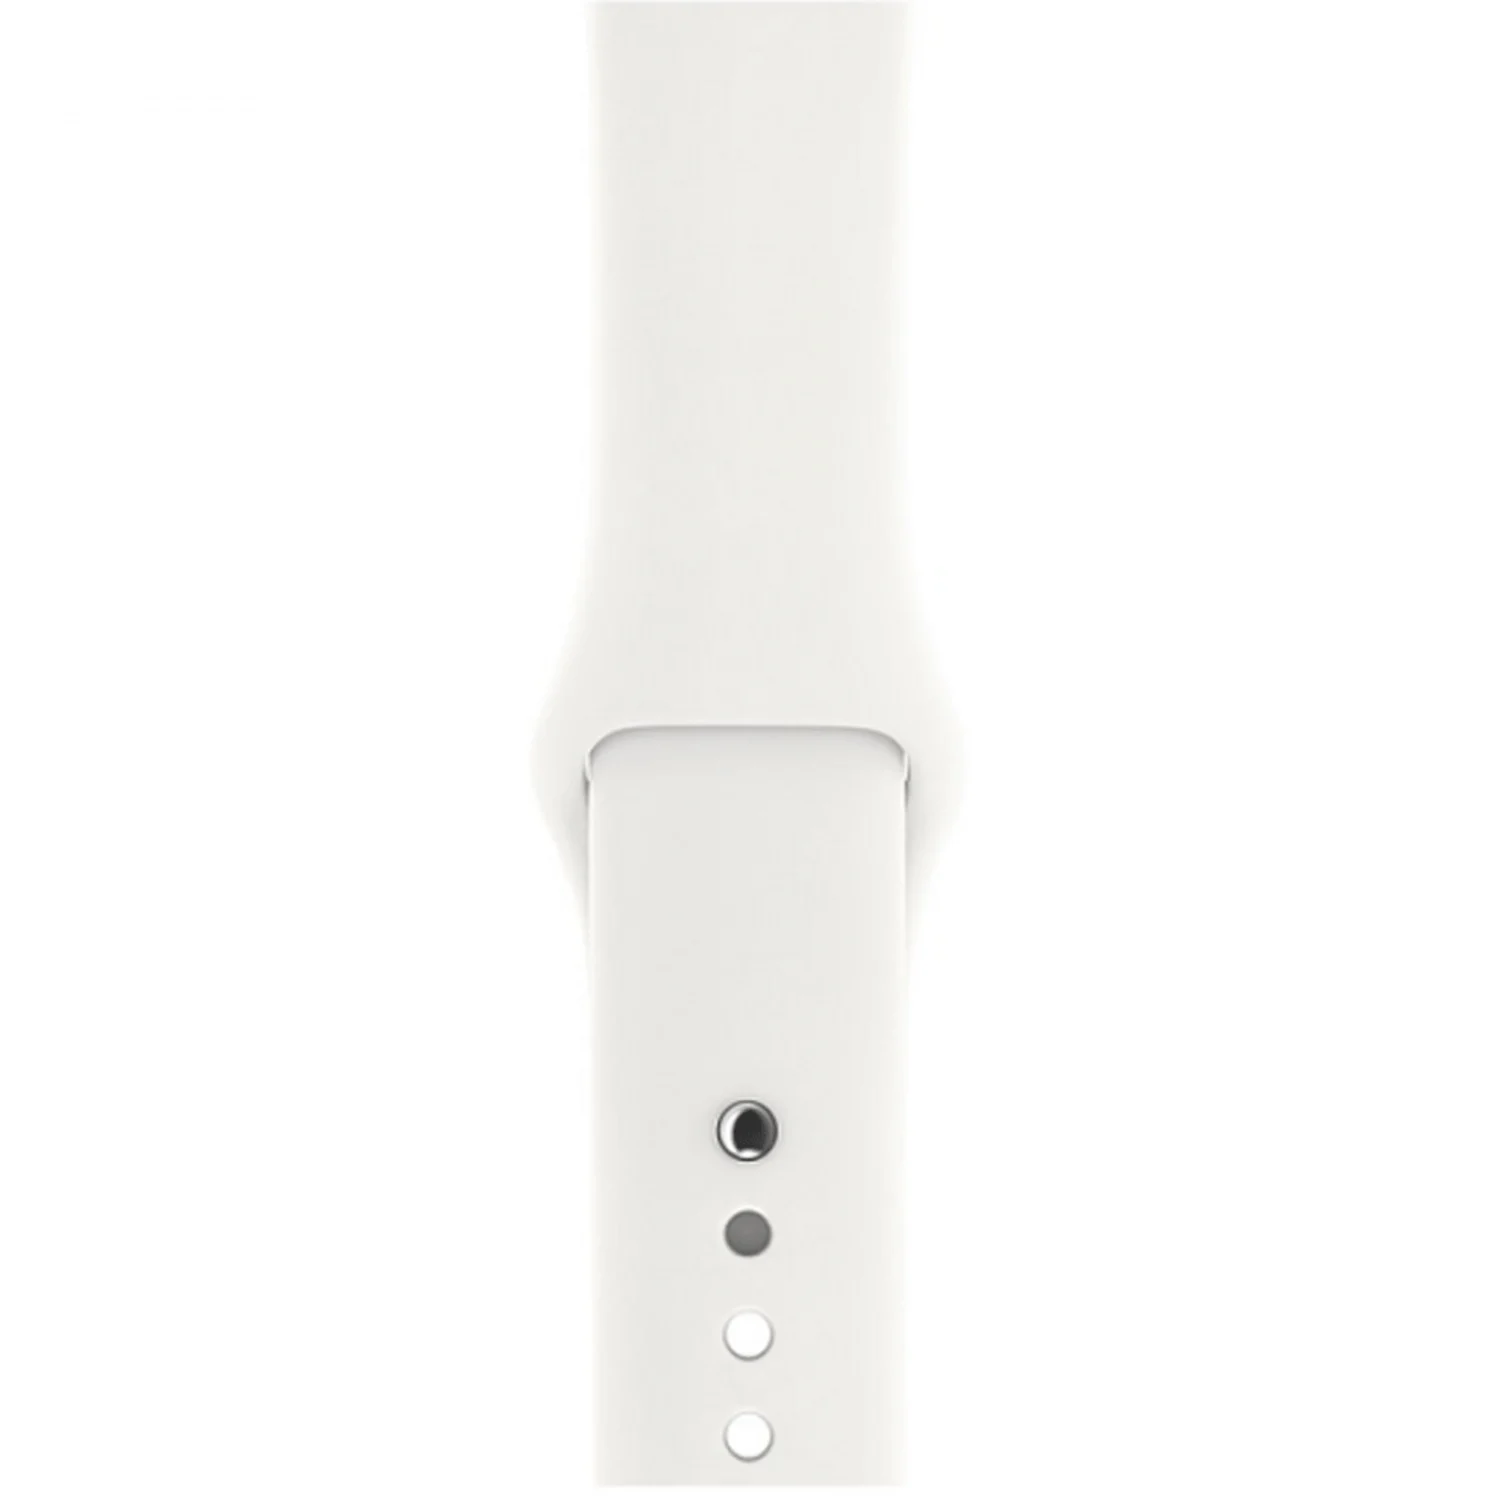 Apple Watch Series 3 MTF22LL/A Caixa Alumínio 42mm Prata - Esportiva Branco